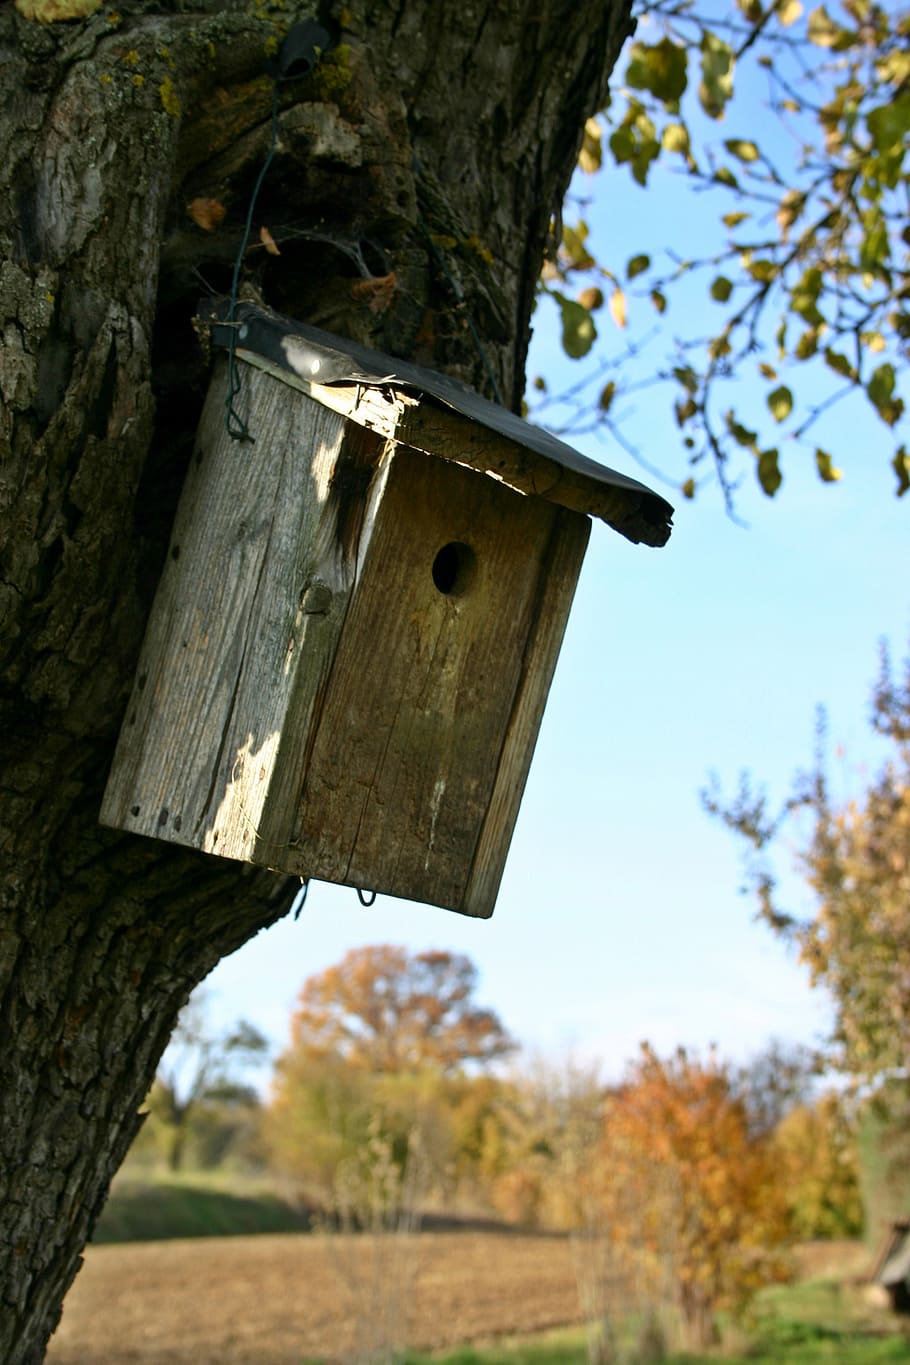 nesting box, tree, plant, aviary, bird feeder, breed, animal welfare